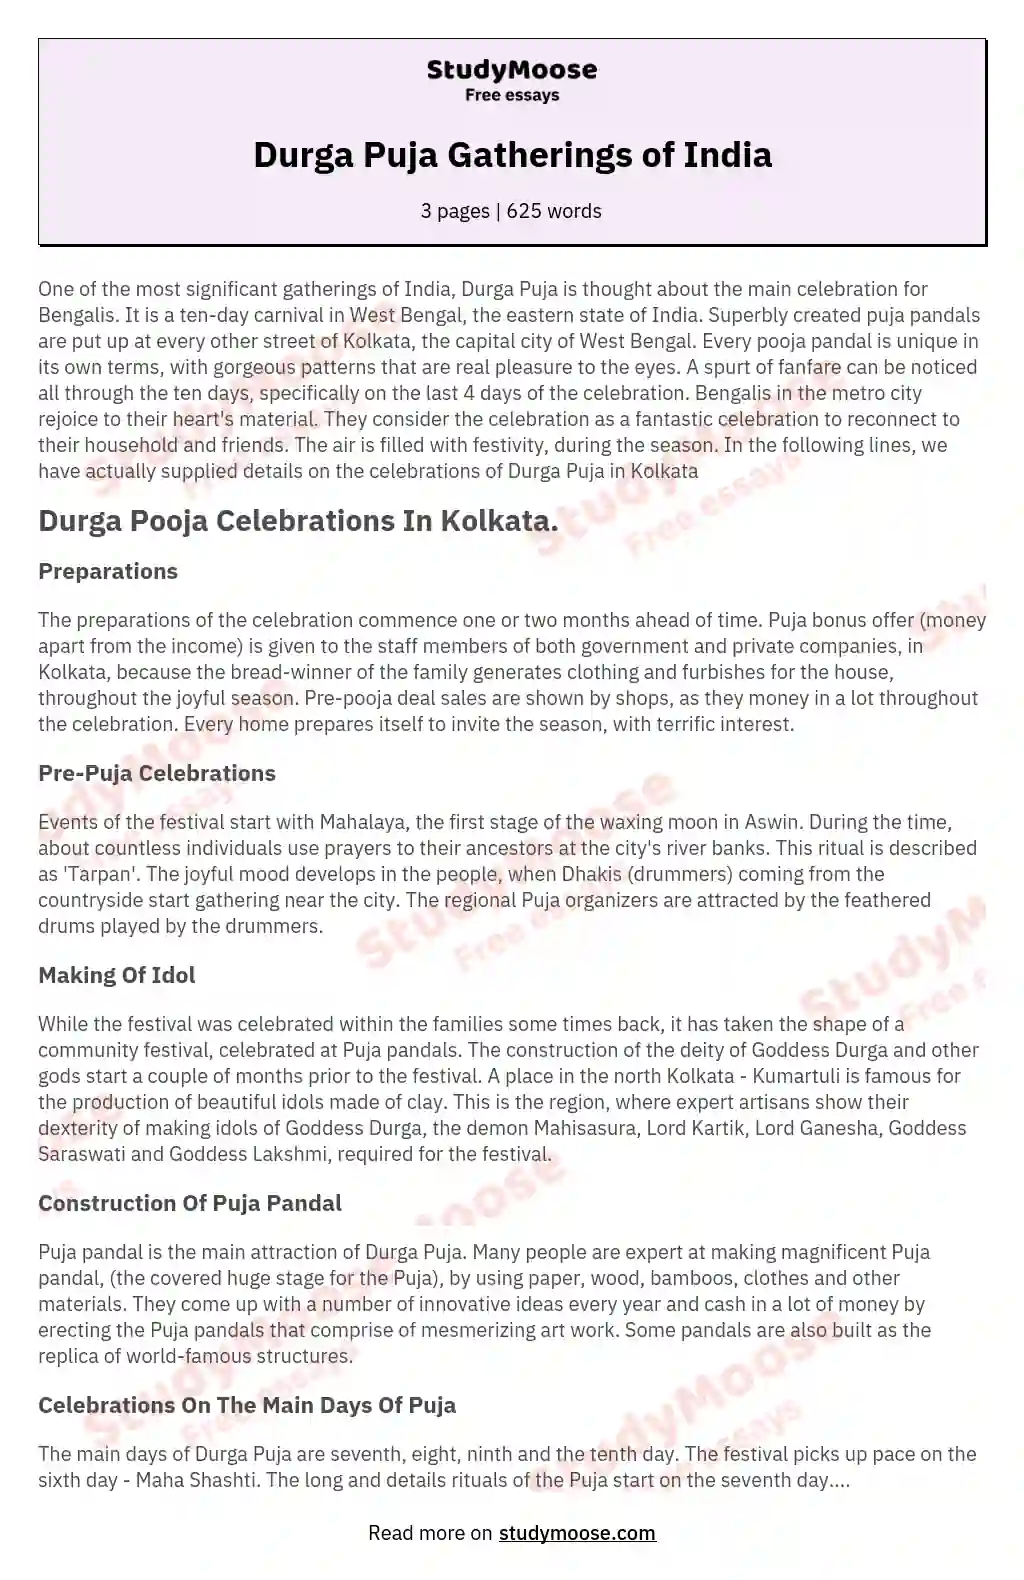 Durga Puja Gatherings of India essay